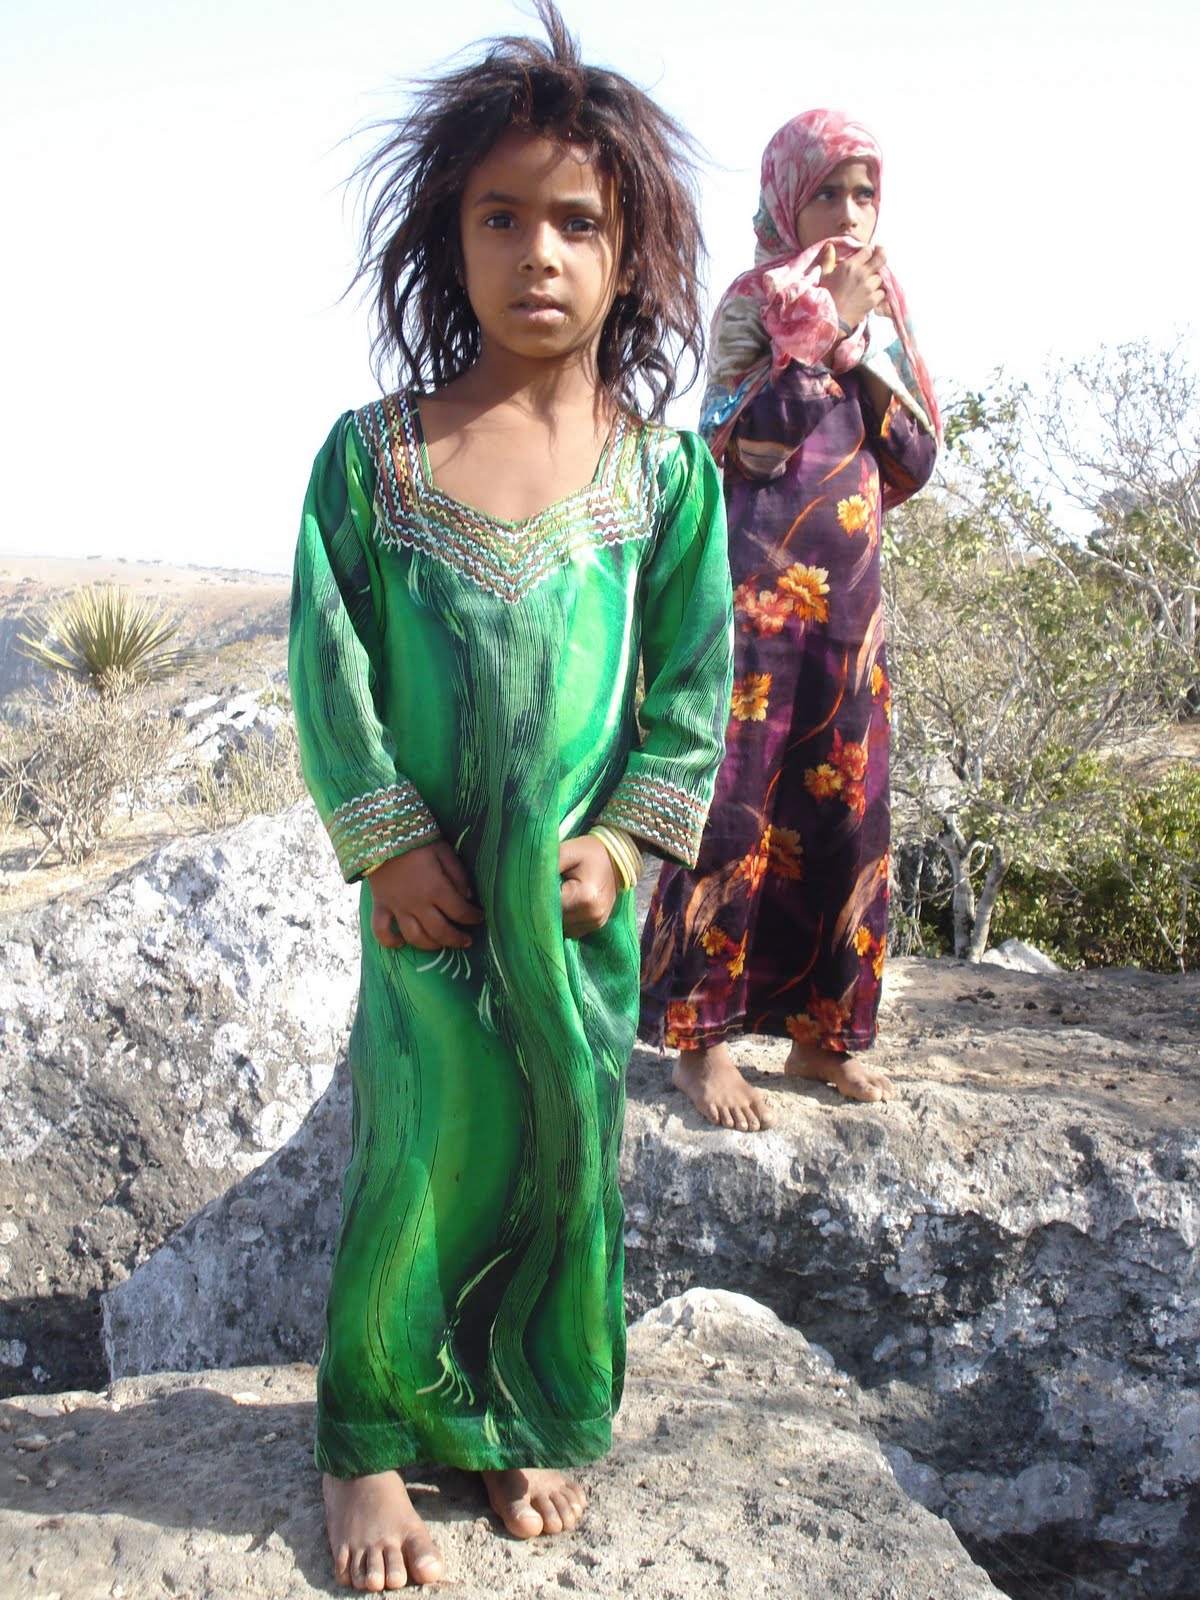 Socotra.girls.jpg